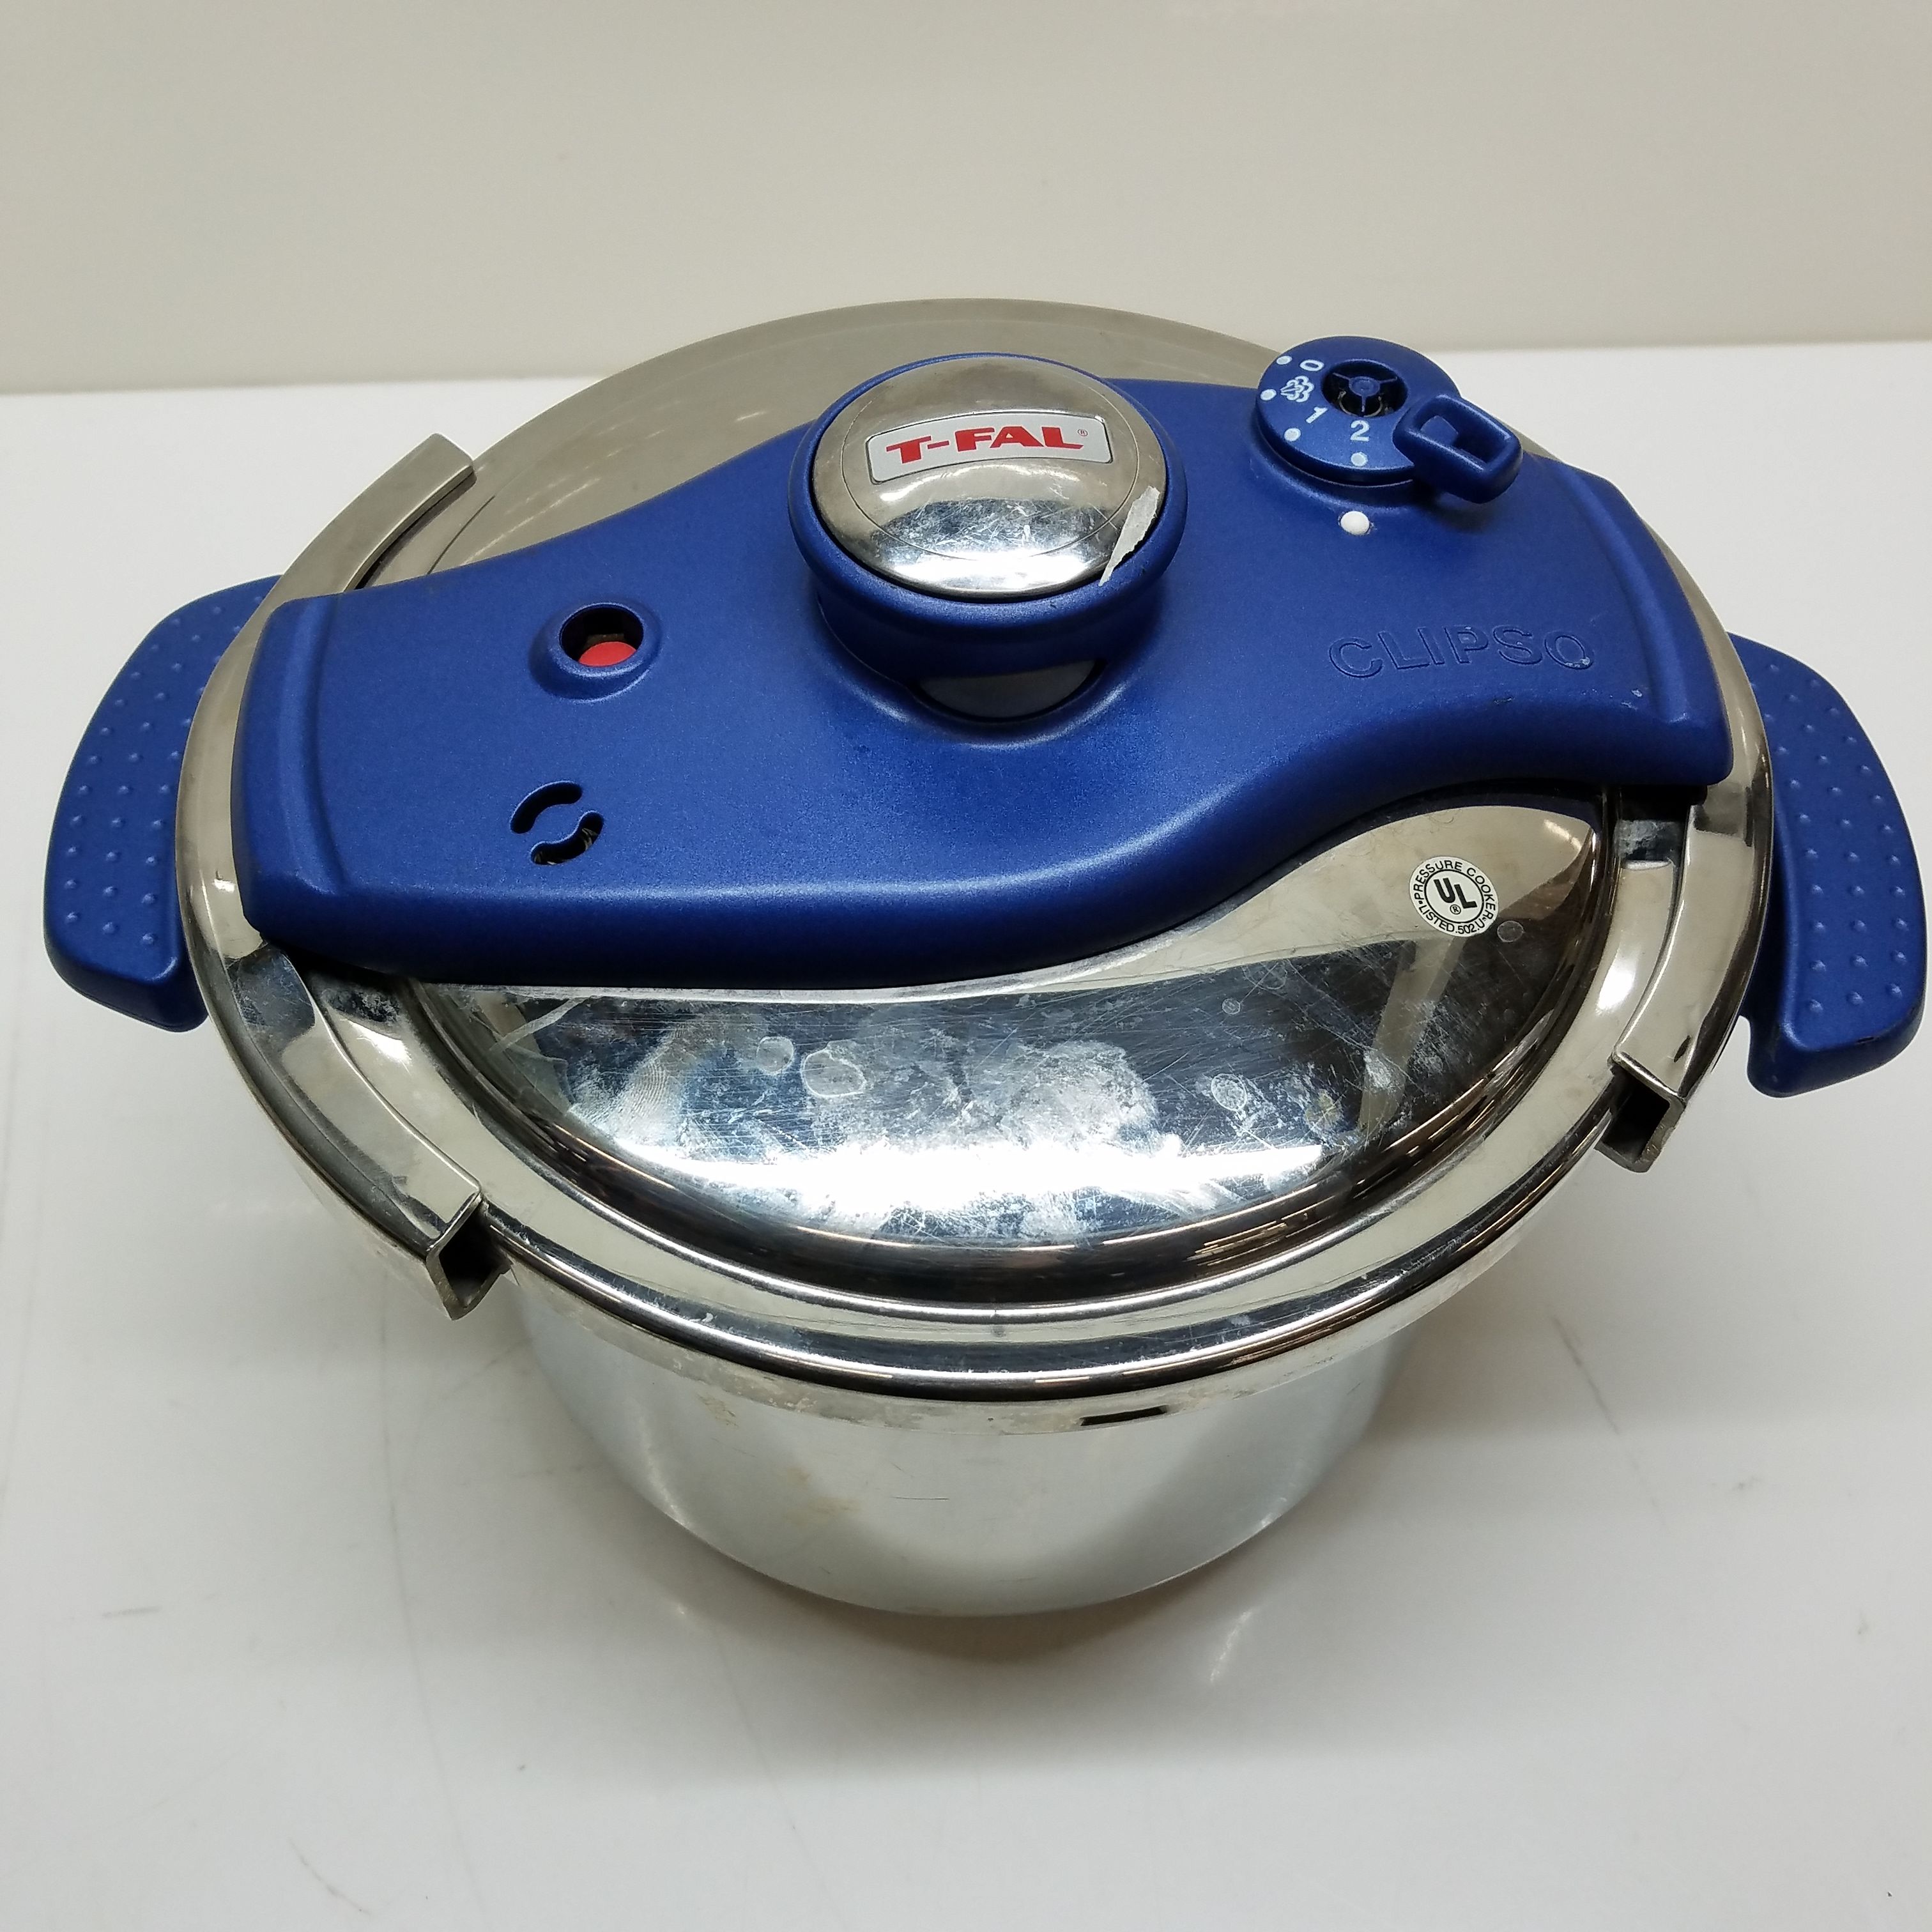 t fal pressure cooker 6QT for Sale in Rialto, CA - OfferUp